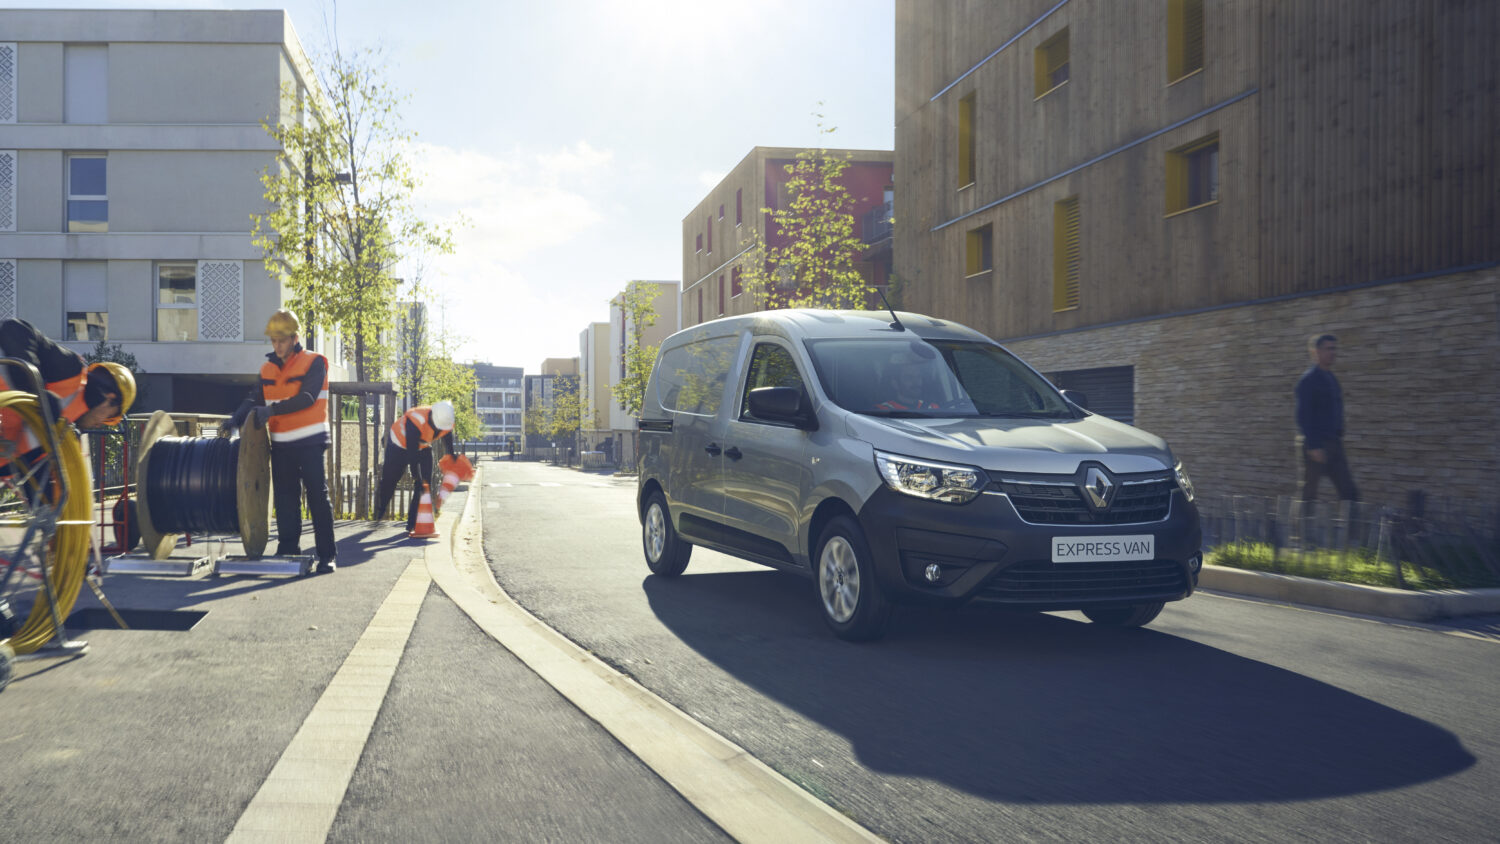 2021 - New Renault Express Van on location..jpeg